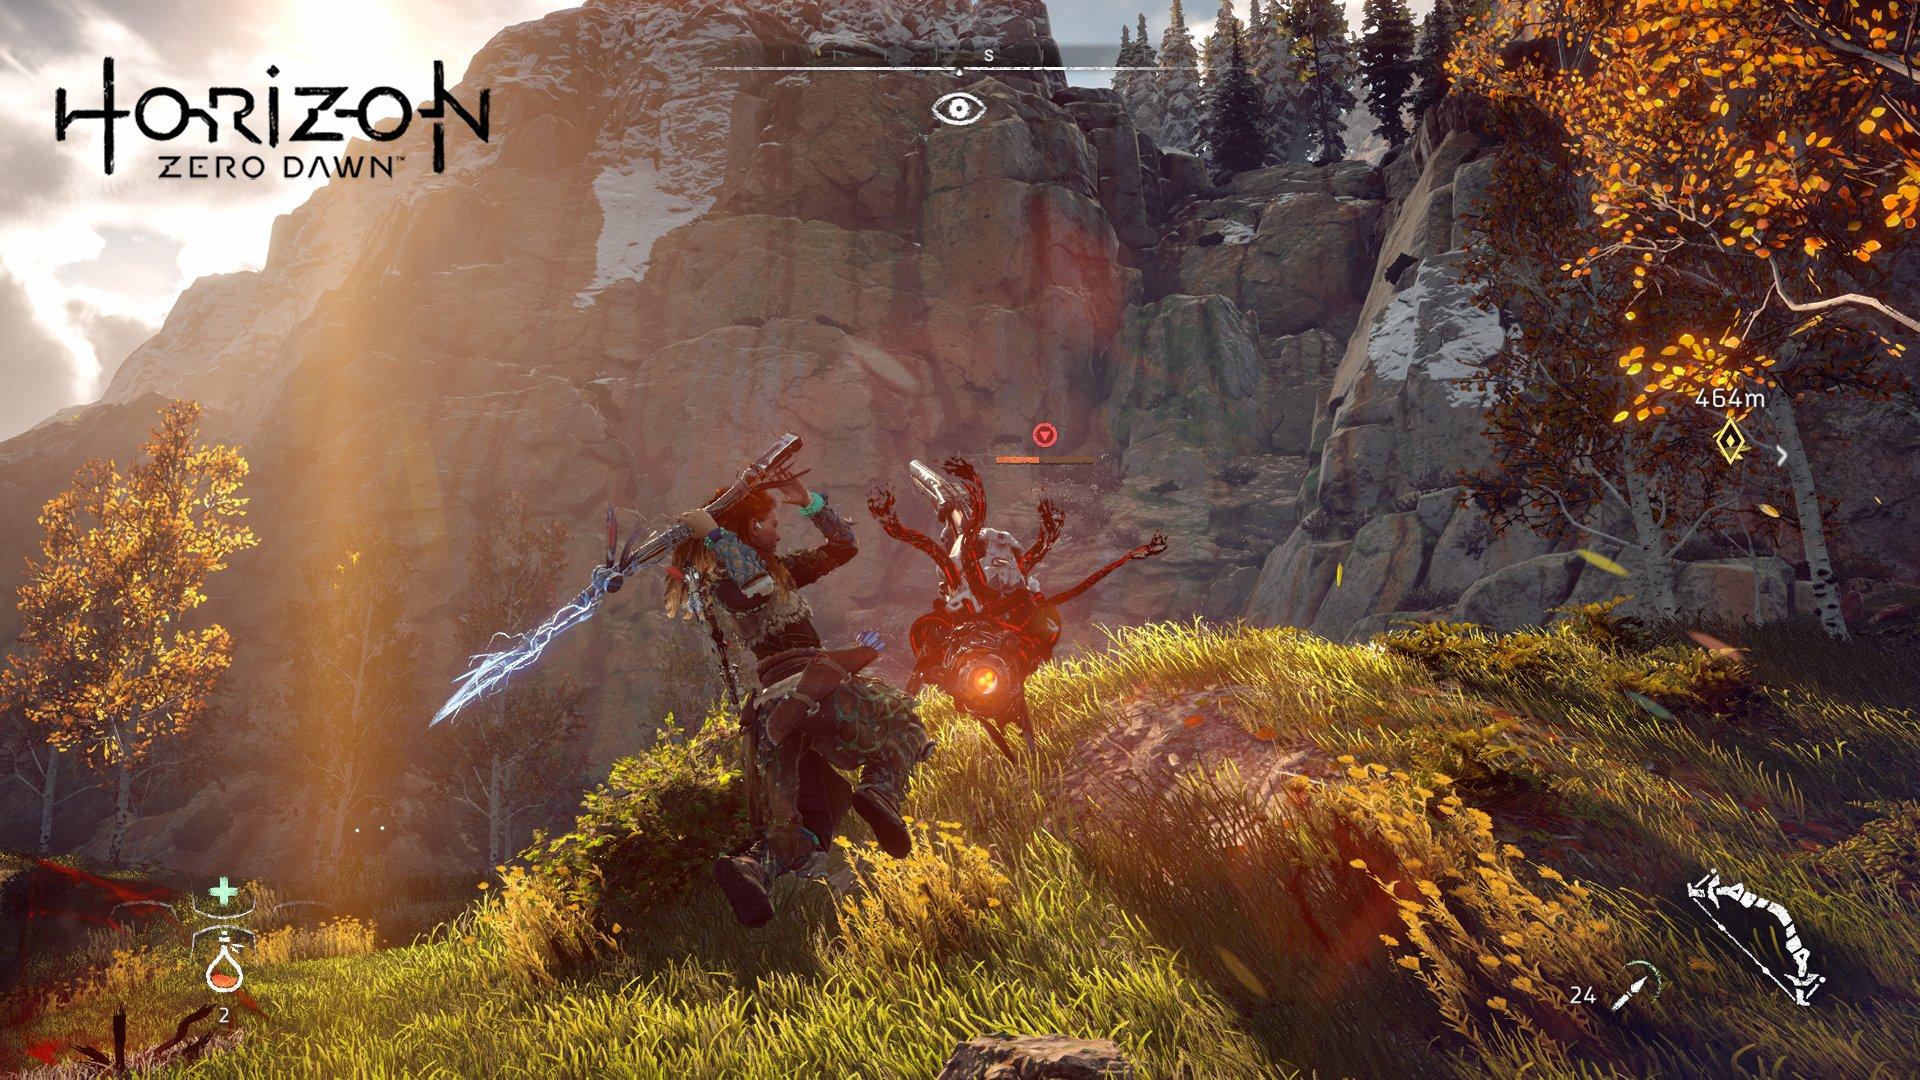 Horizon Zero Dawn - PS4 Games